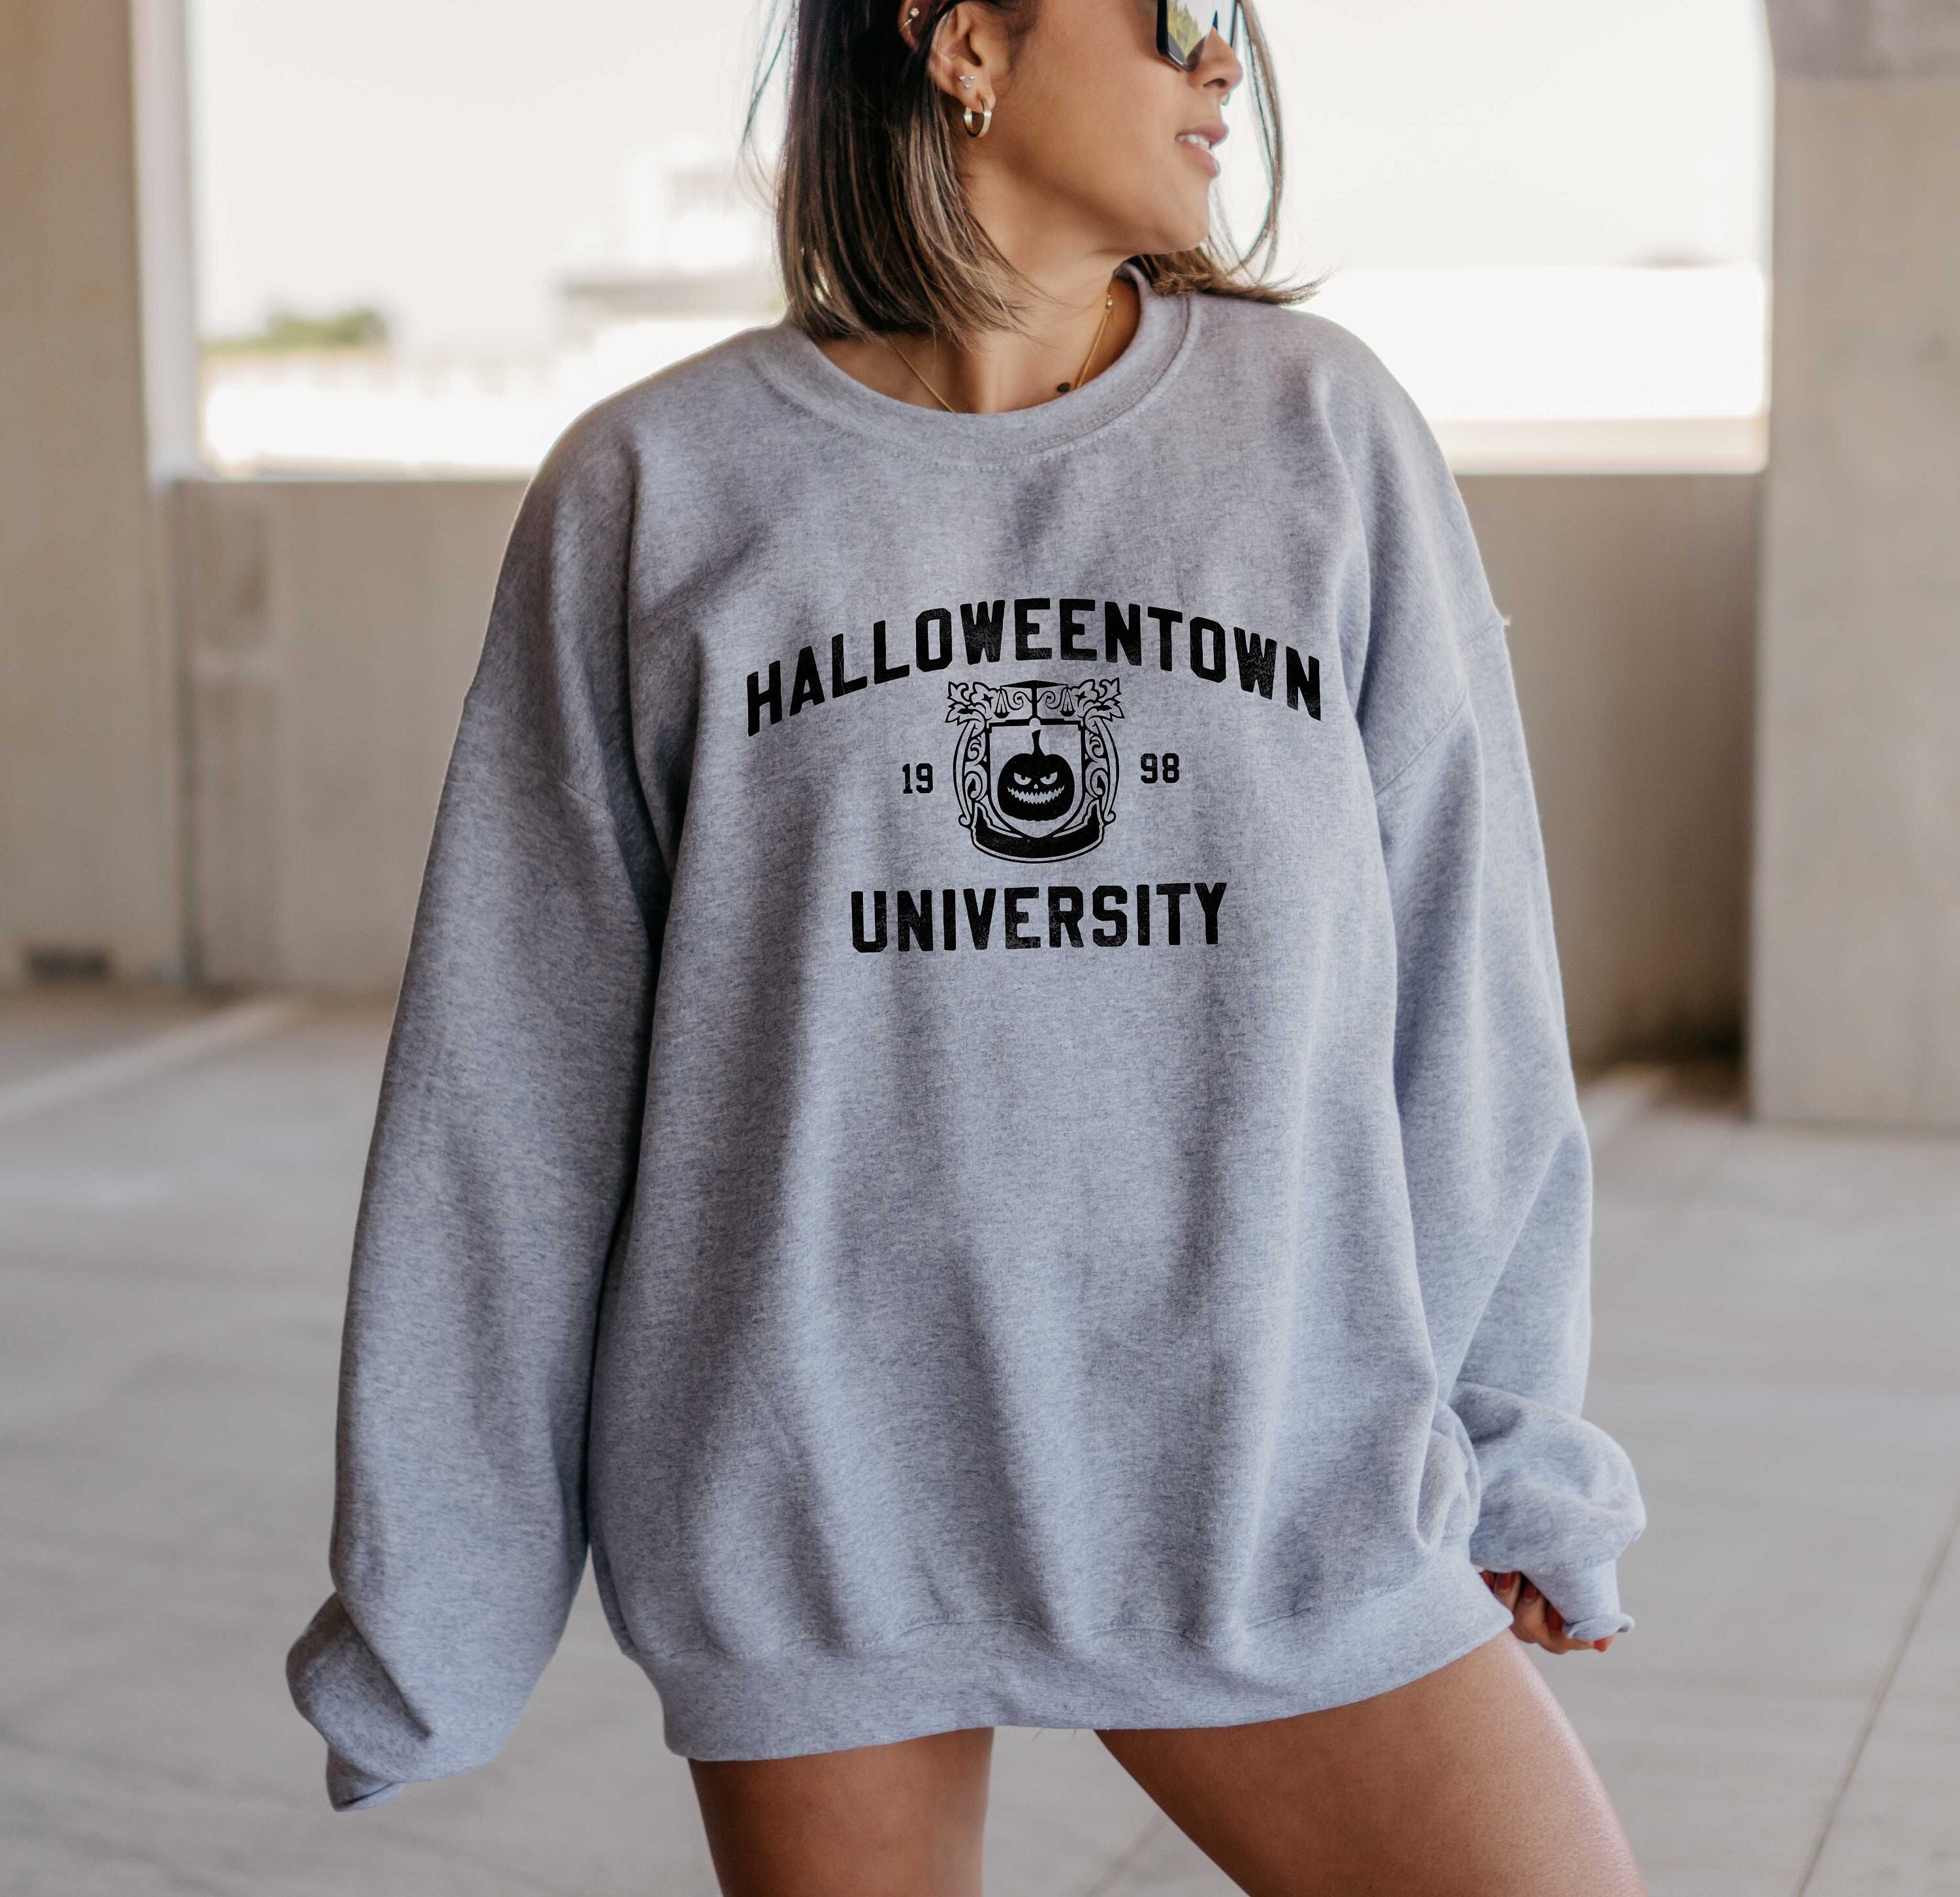 Halloweentown University Sweatshirt - T-Shirt, Halloweentown Sweatshirt,  Halloweentown University Sweater, Vintage Halloween Sweatshirts for Women  or Men at  Women's Clothing store